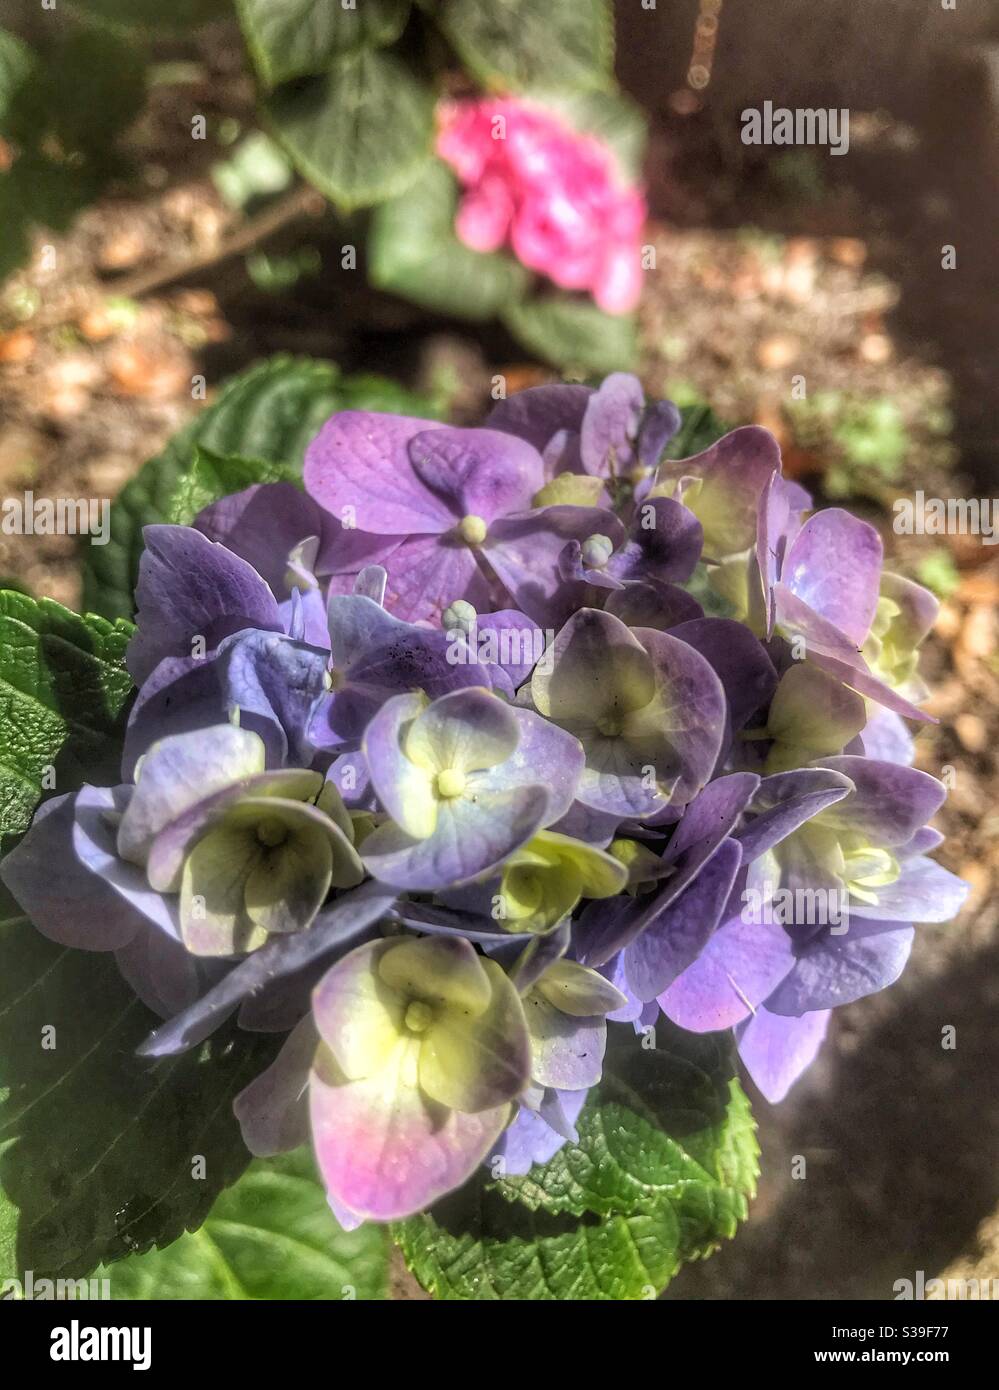 Hydrangeas blooming in the garden Stock Photo